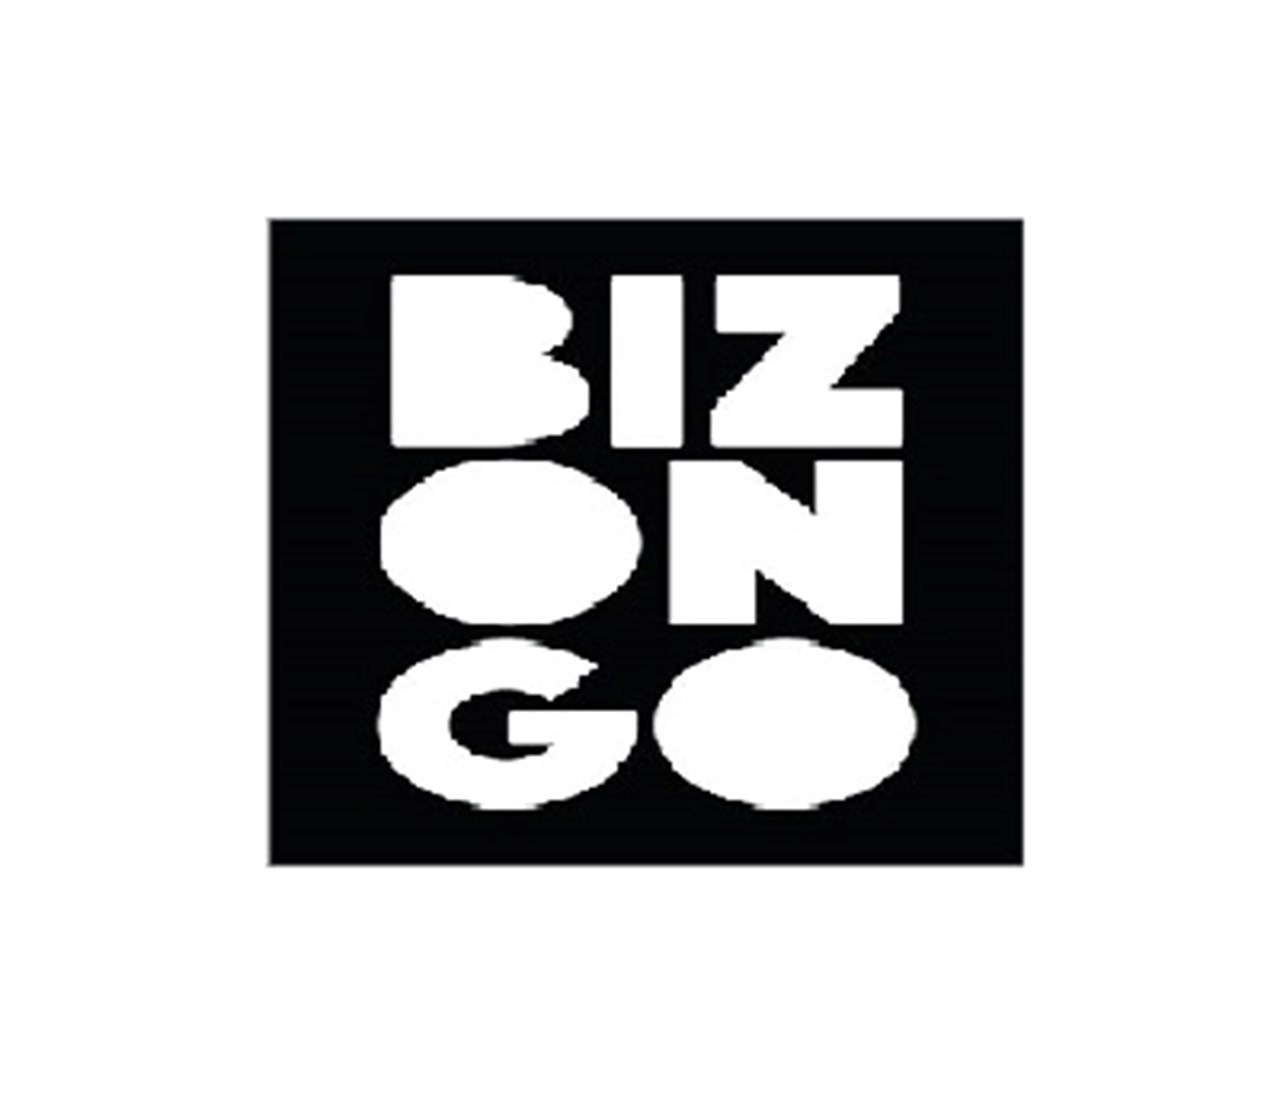 Bizongo - Vendor Digitization Platform